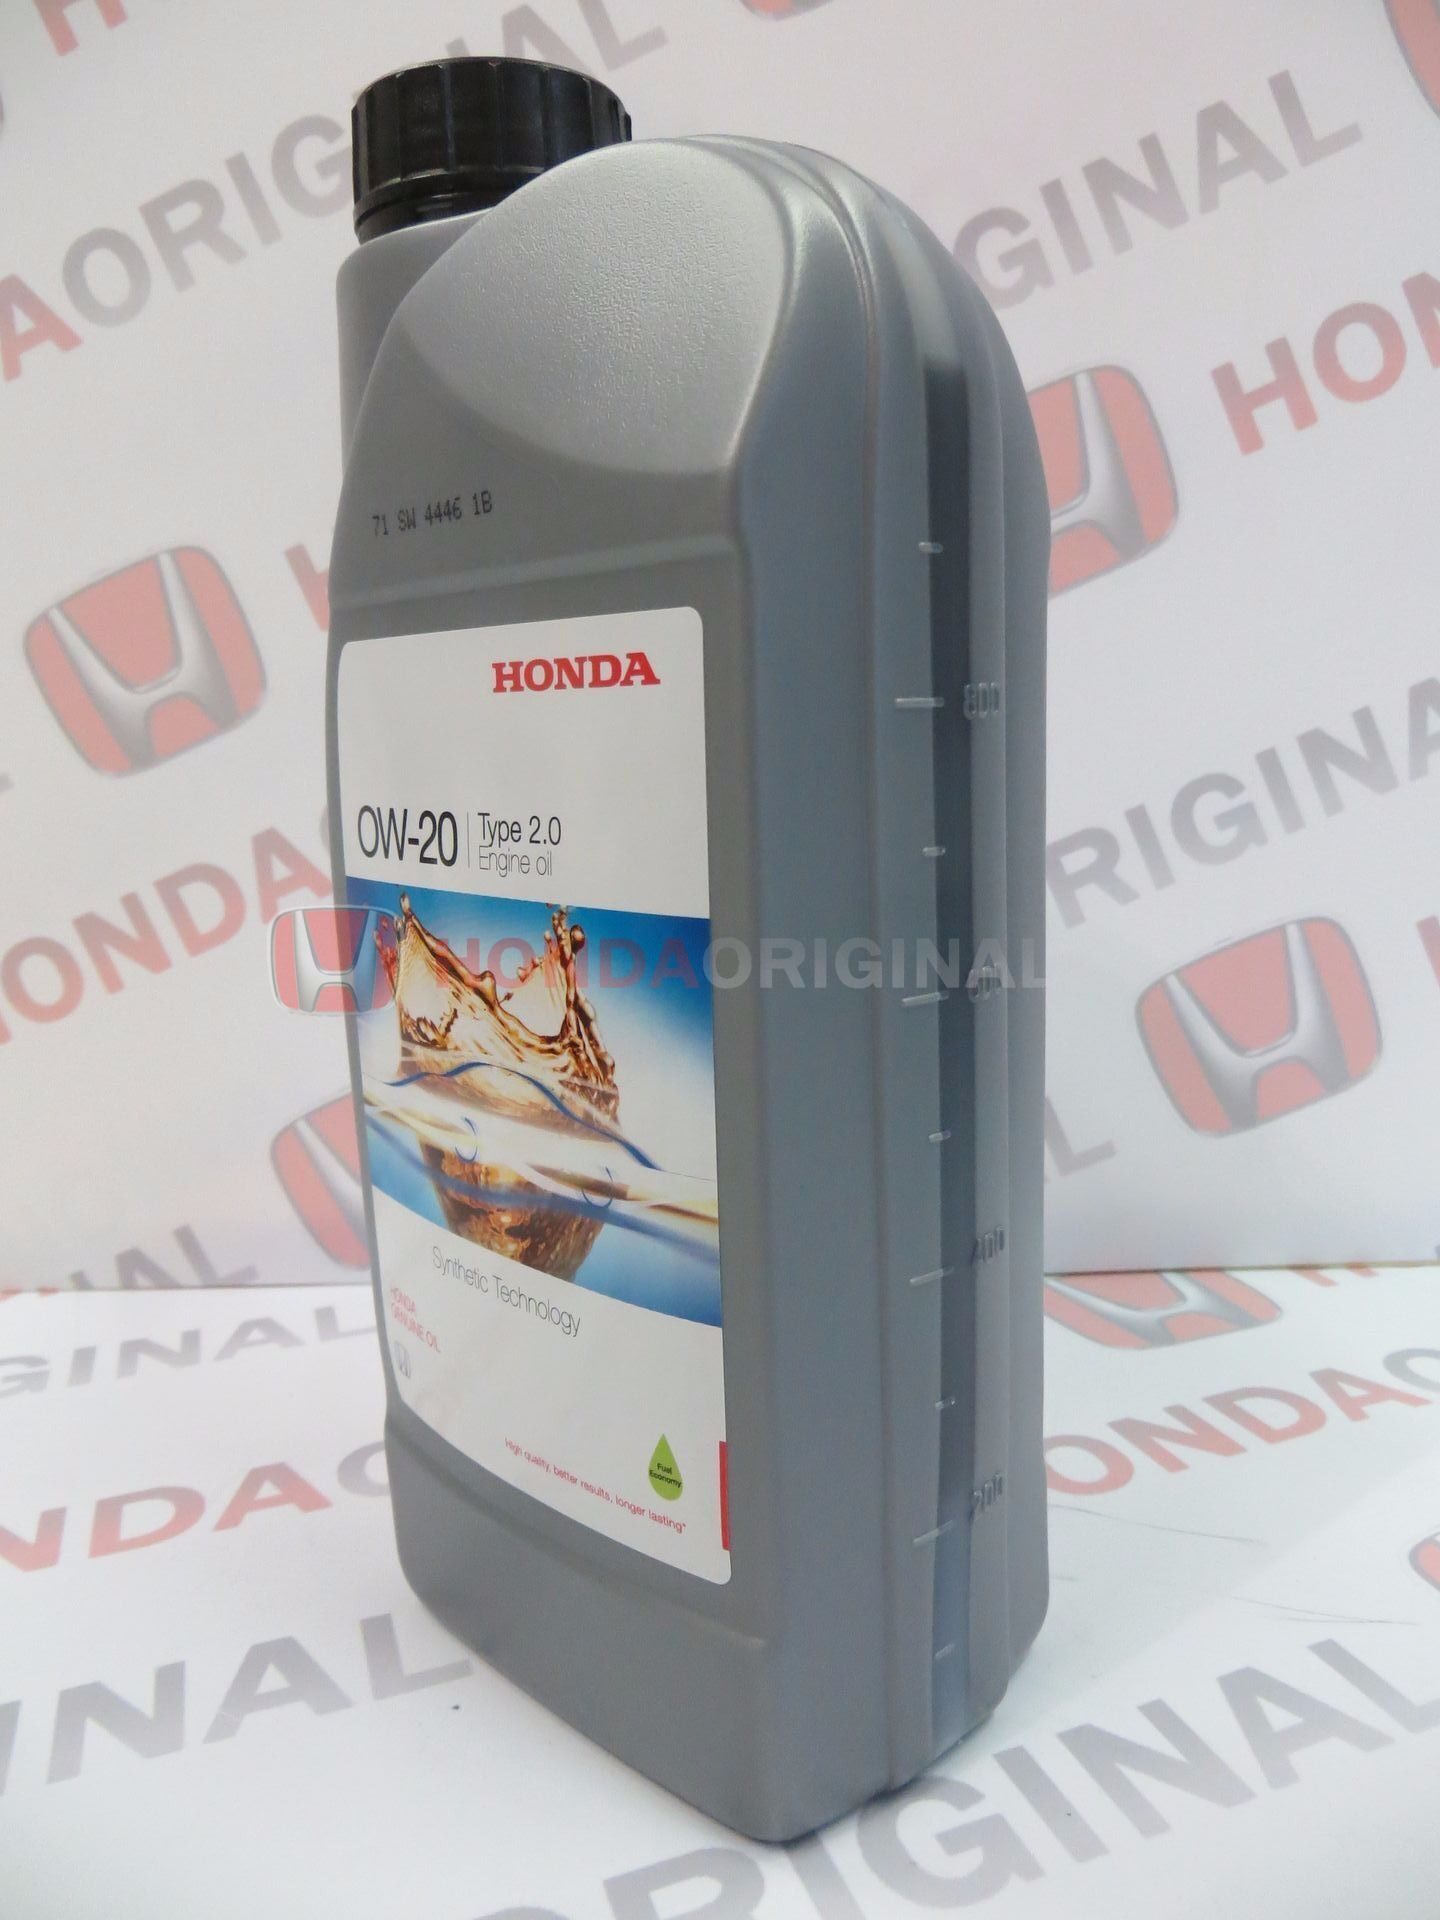 Масло Хонда 0w20. Моторное масло Хонда 0w20. Масло Honda 0w20 Hybrid. Honda 1 литр масло. Масло хонда оригинал 0w20